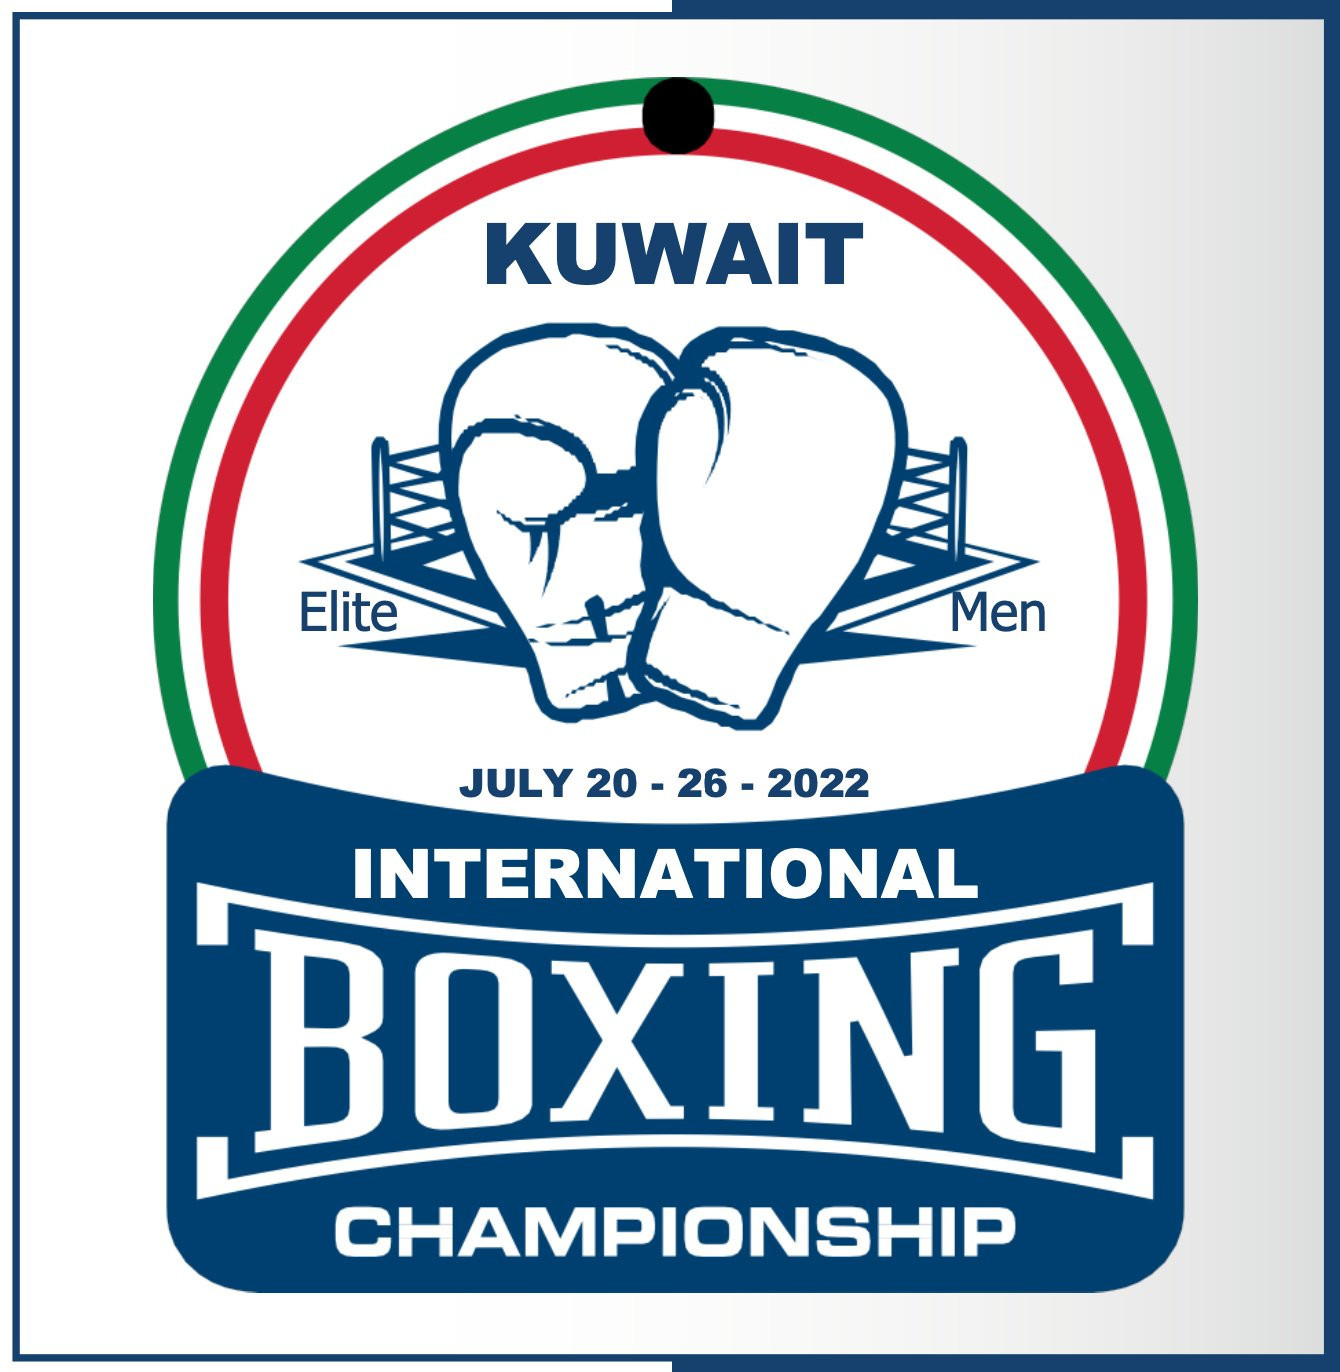 Umar Kremlev attended the Opening Ceremony of the Kuwait International Boxing Championships too ©Kuwait Boxing